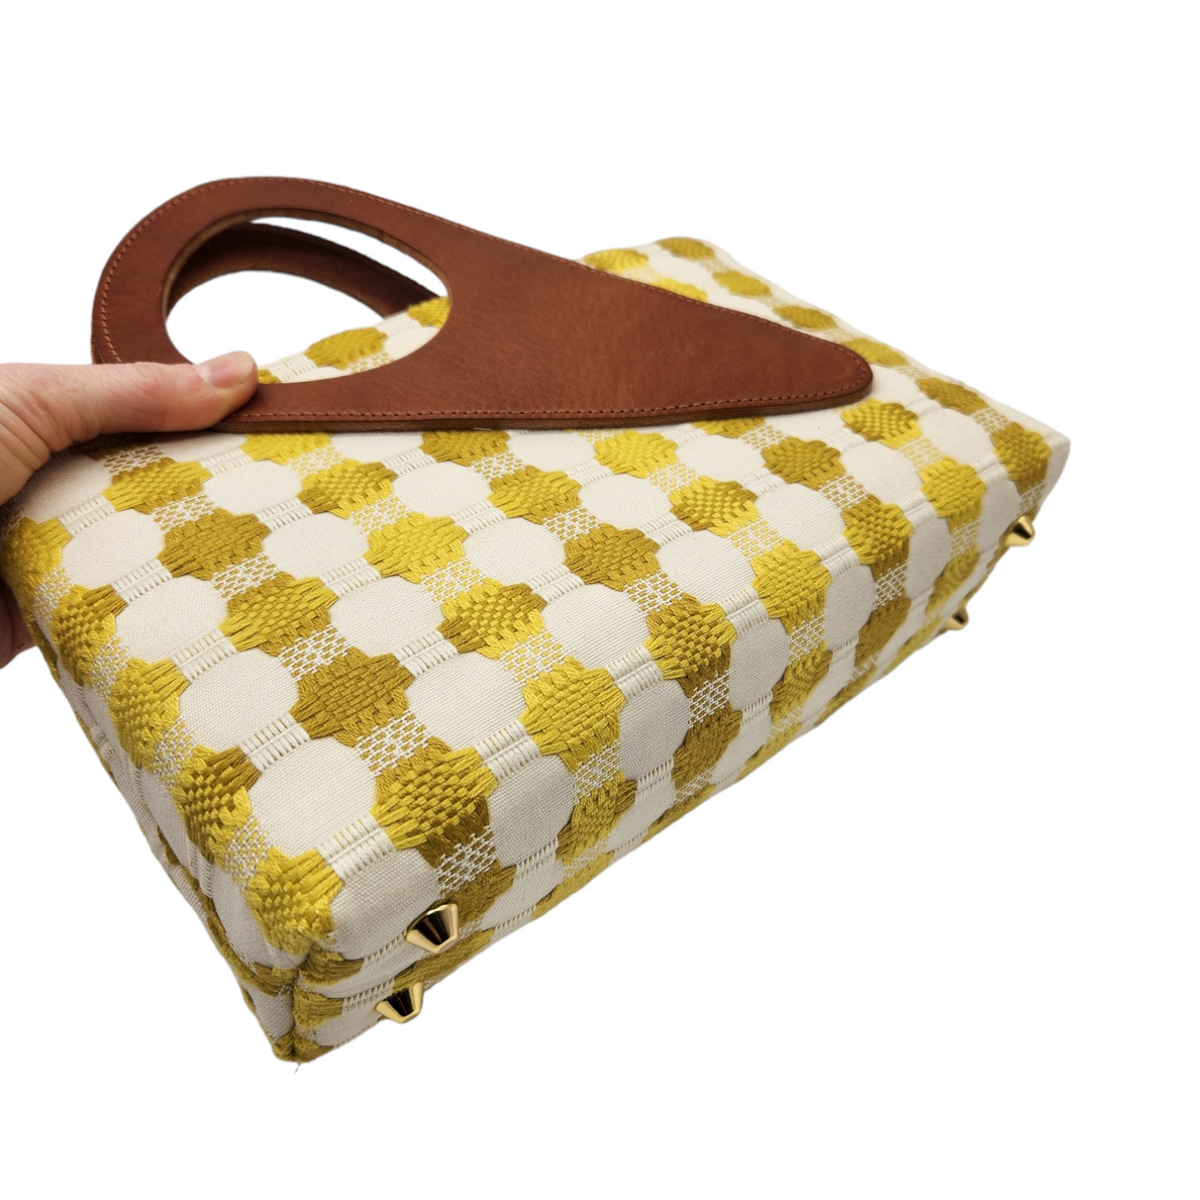 Made-to-Order Mod Egg Handbag - Add Libb Designs